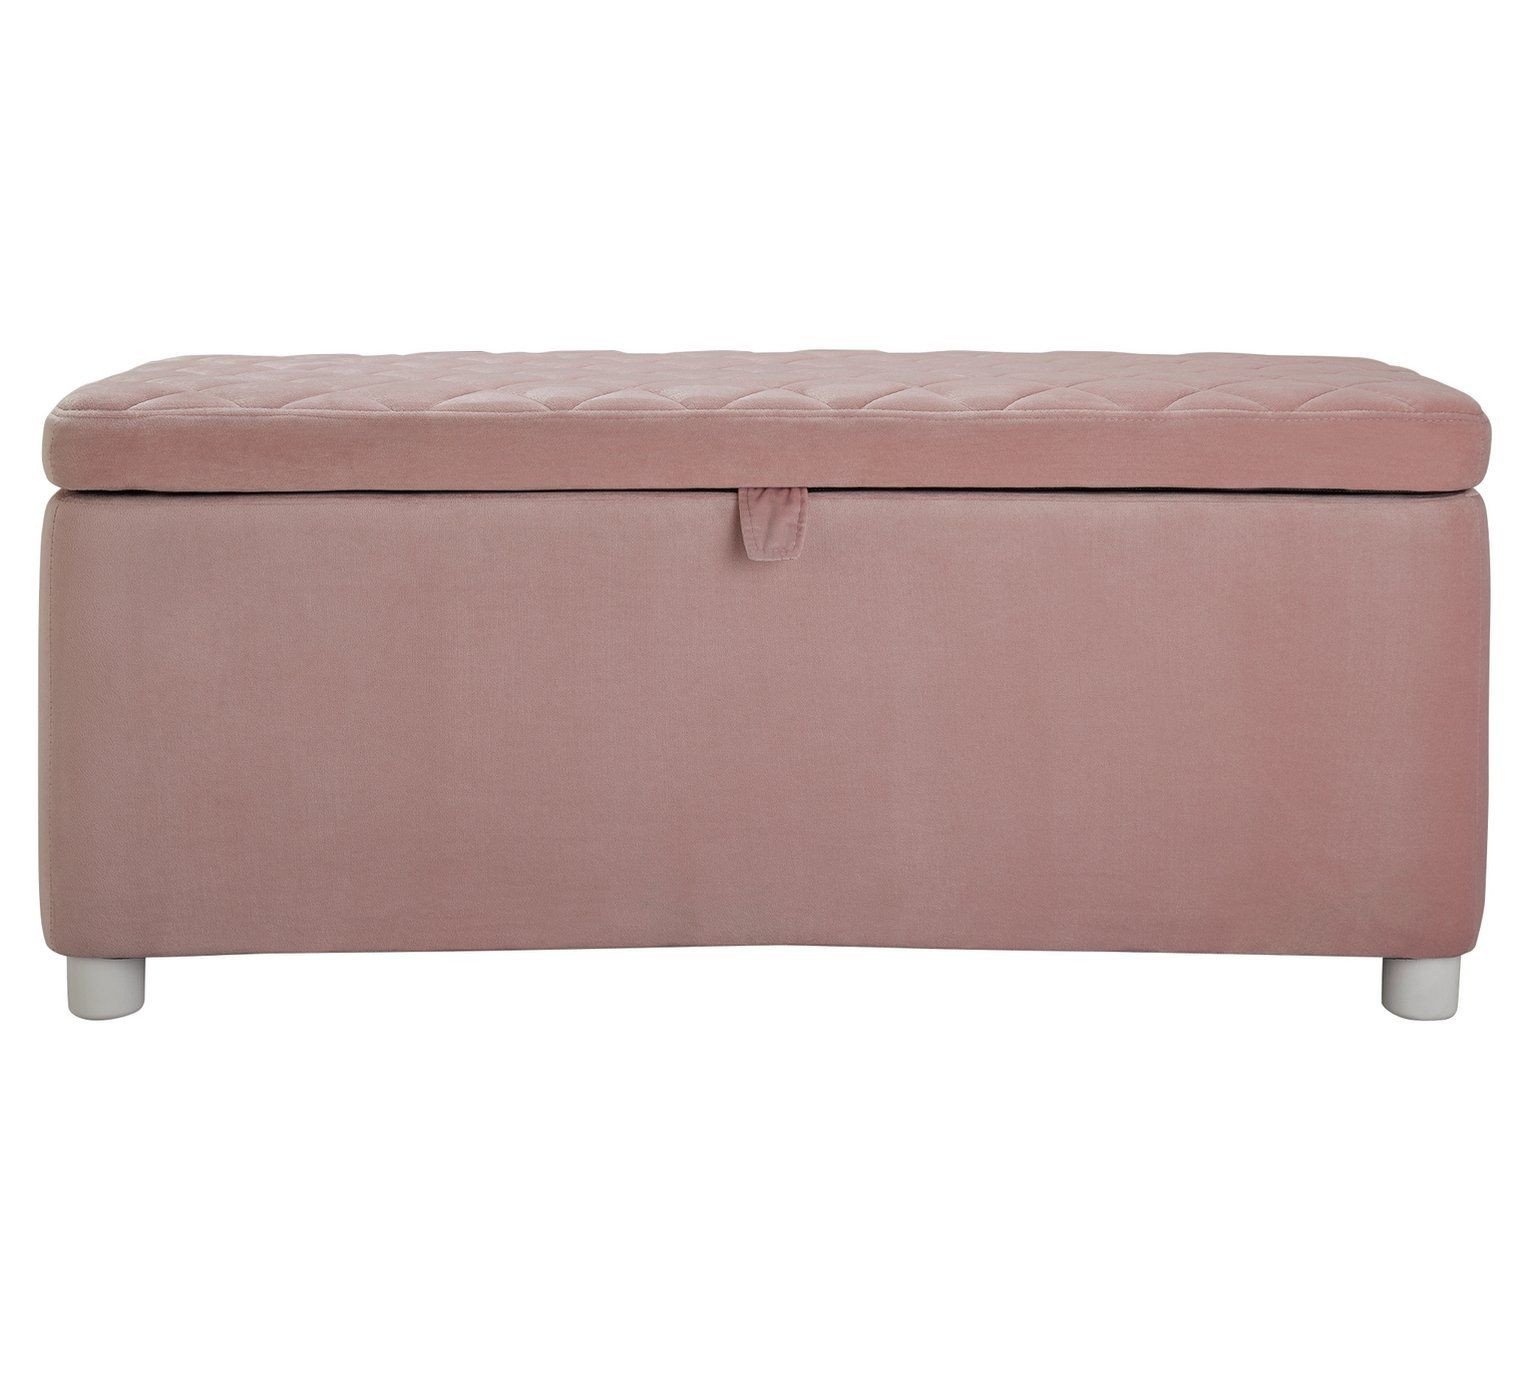 Bedroom Storage Bench Seat Elegant Buy Argos Home Velvet Ottoman Blush Pink